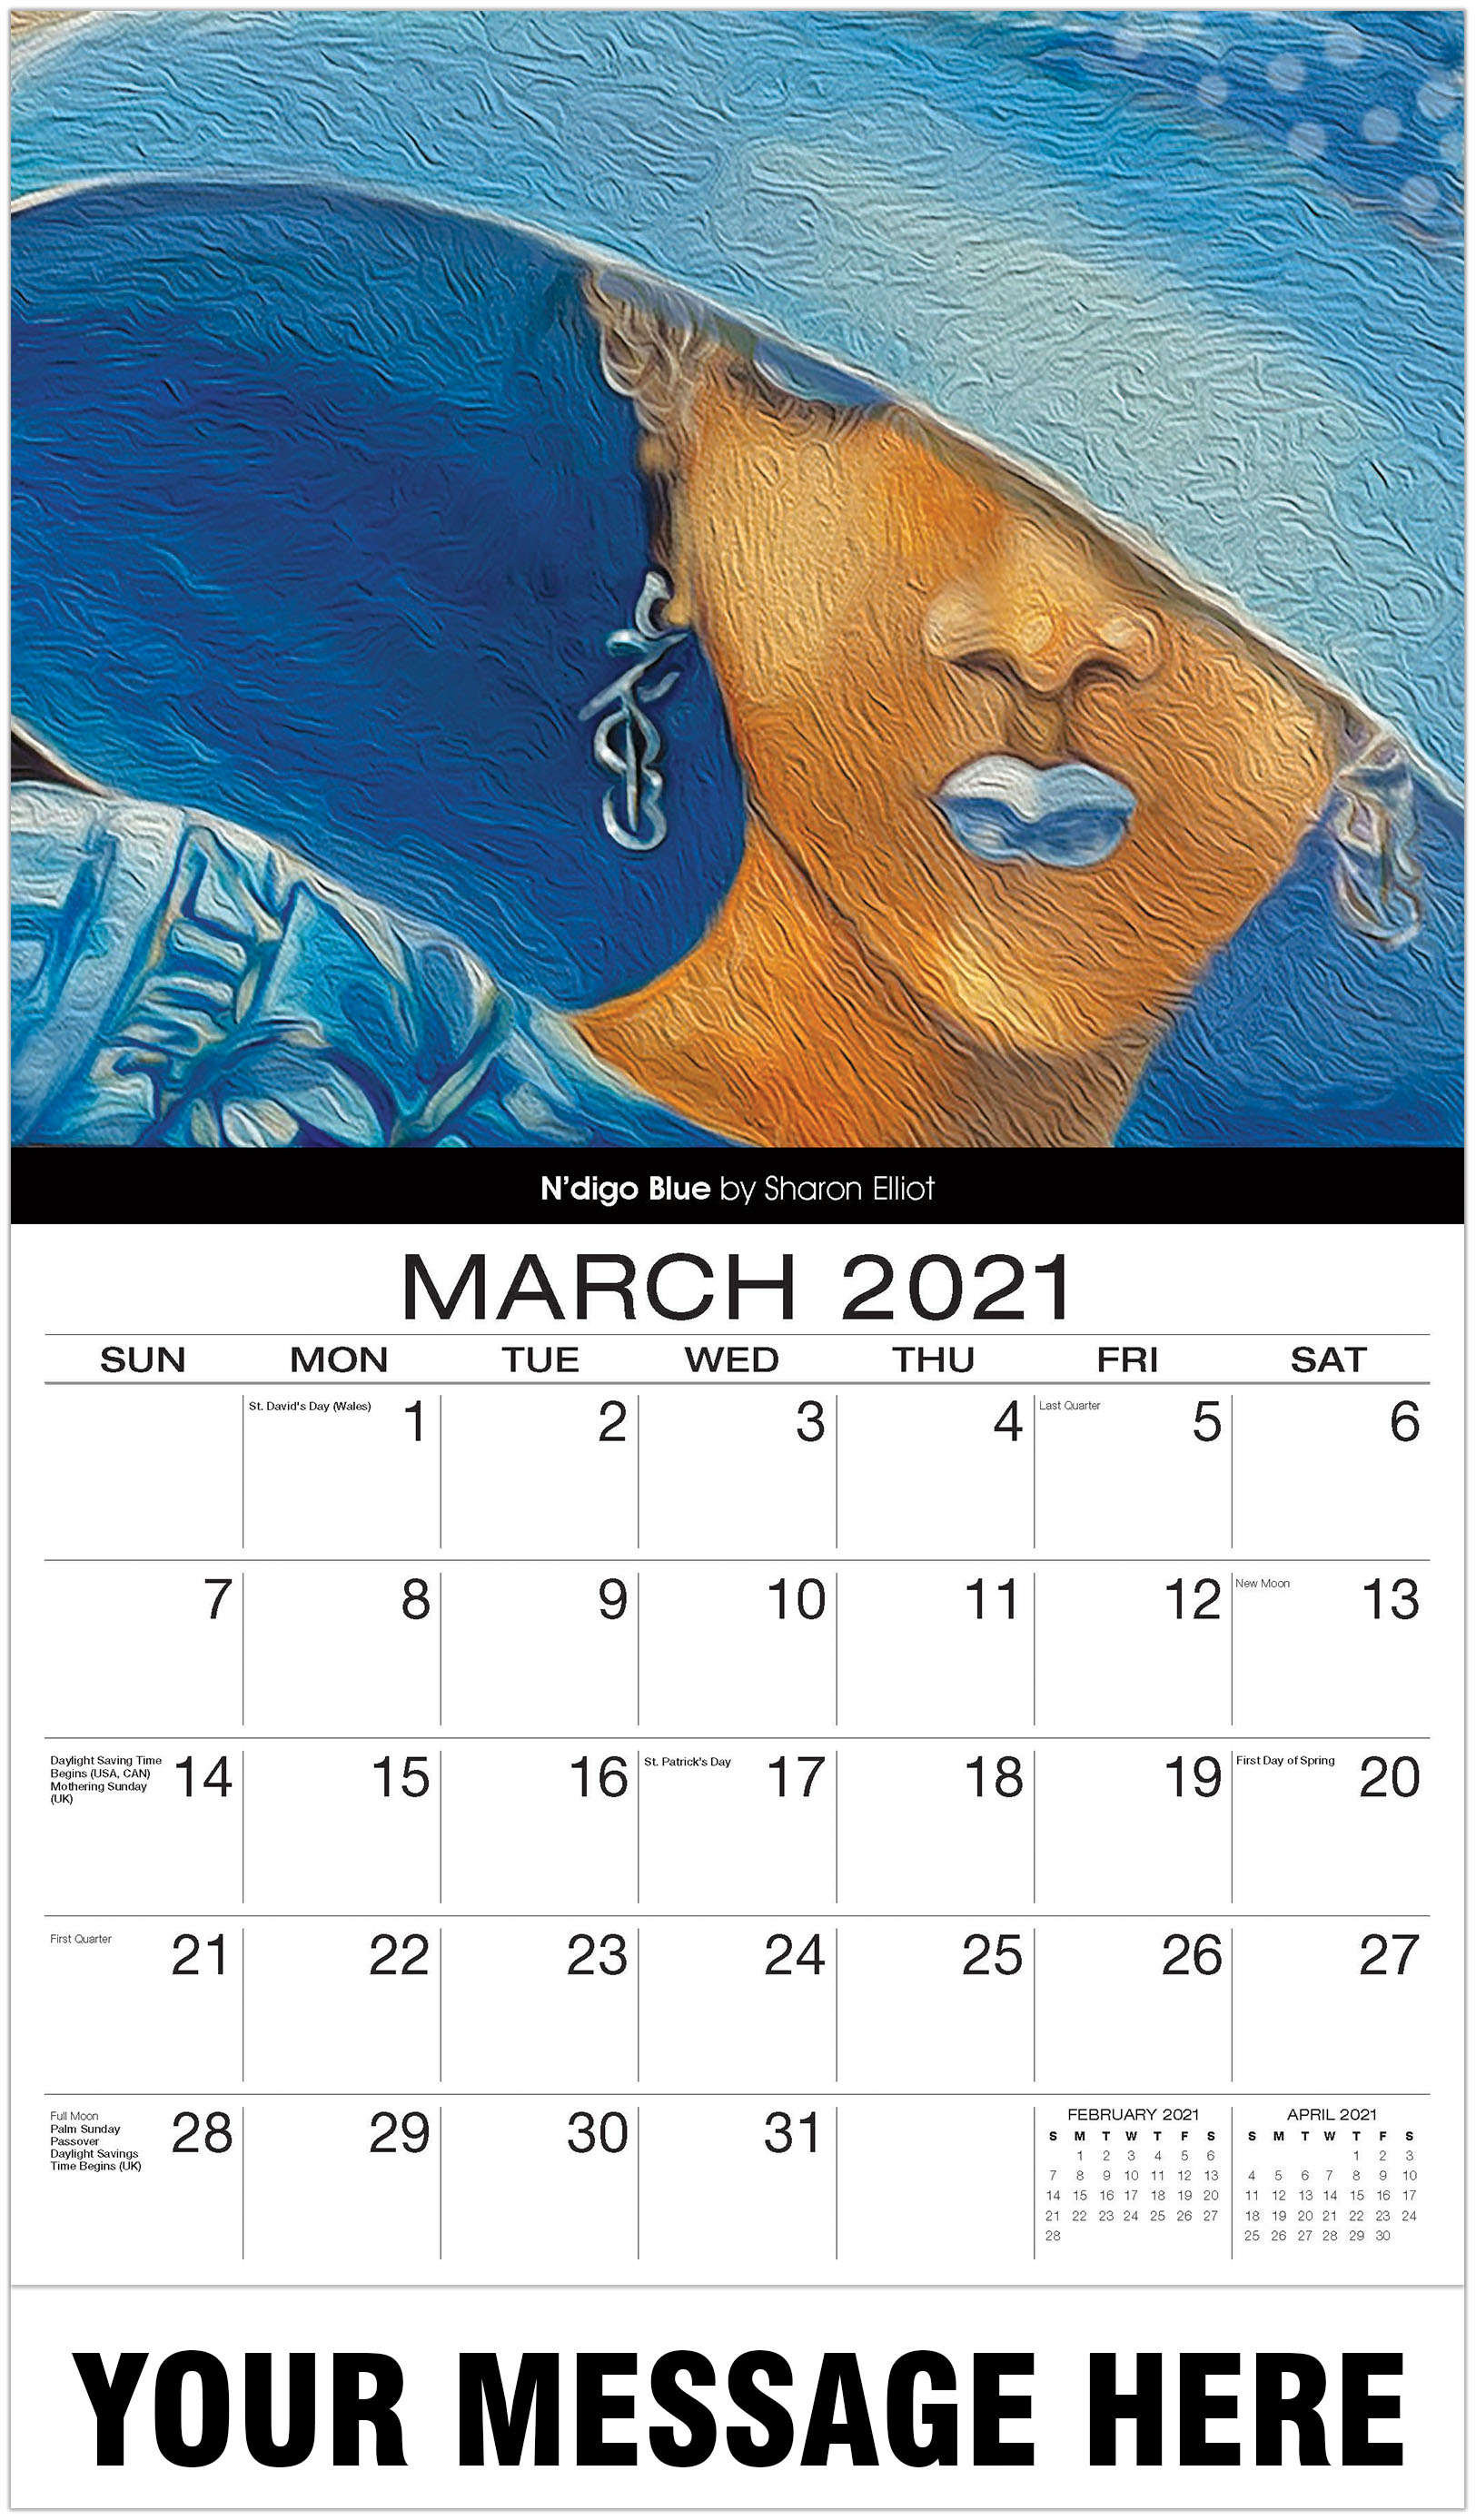 black-art-2021-promotional-calendar-african-american-art-advertising-calendar